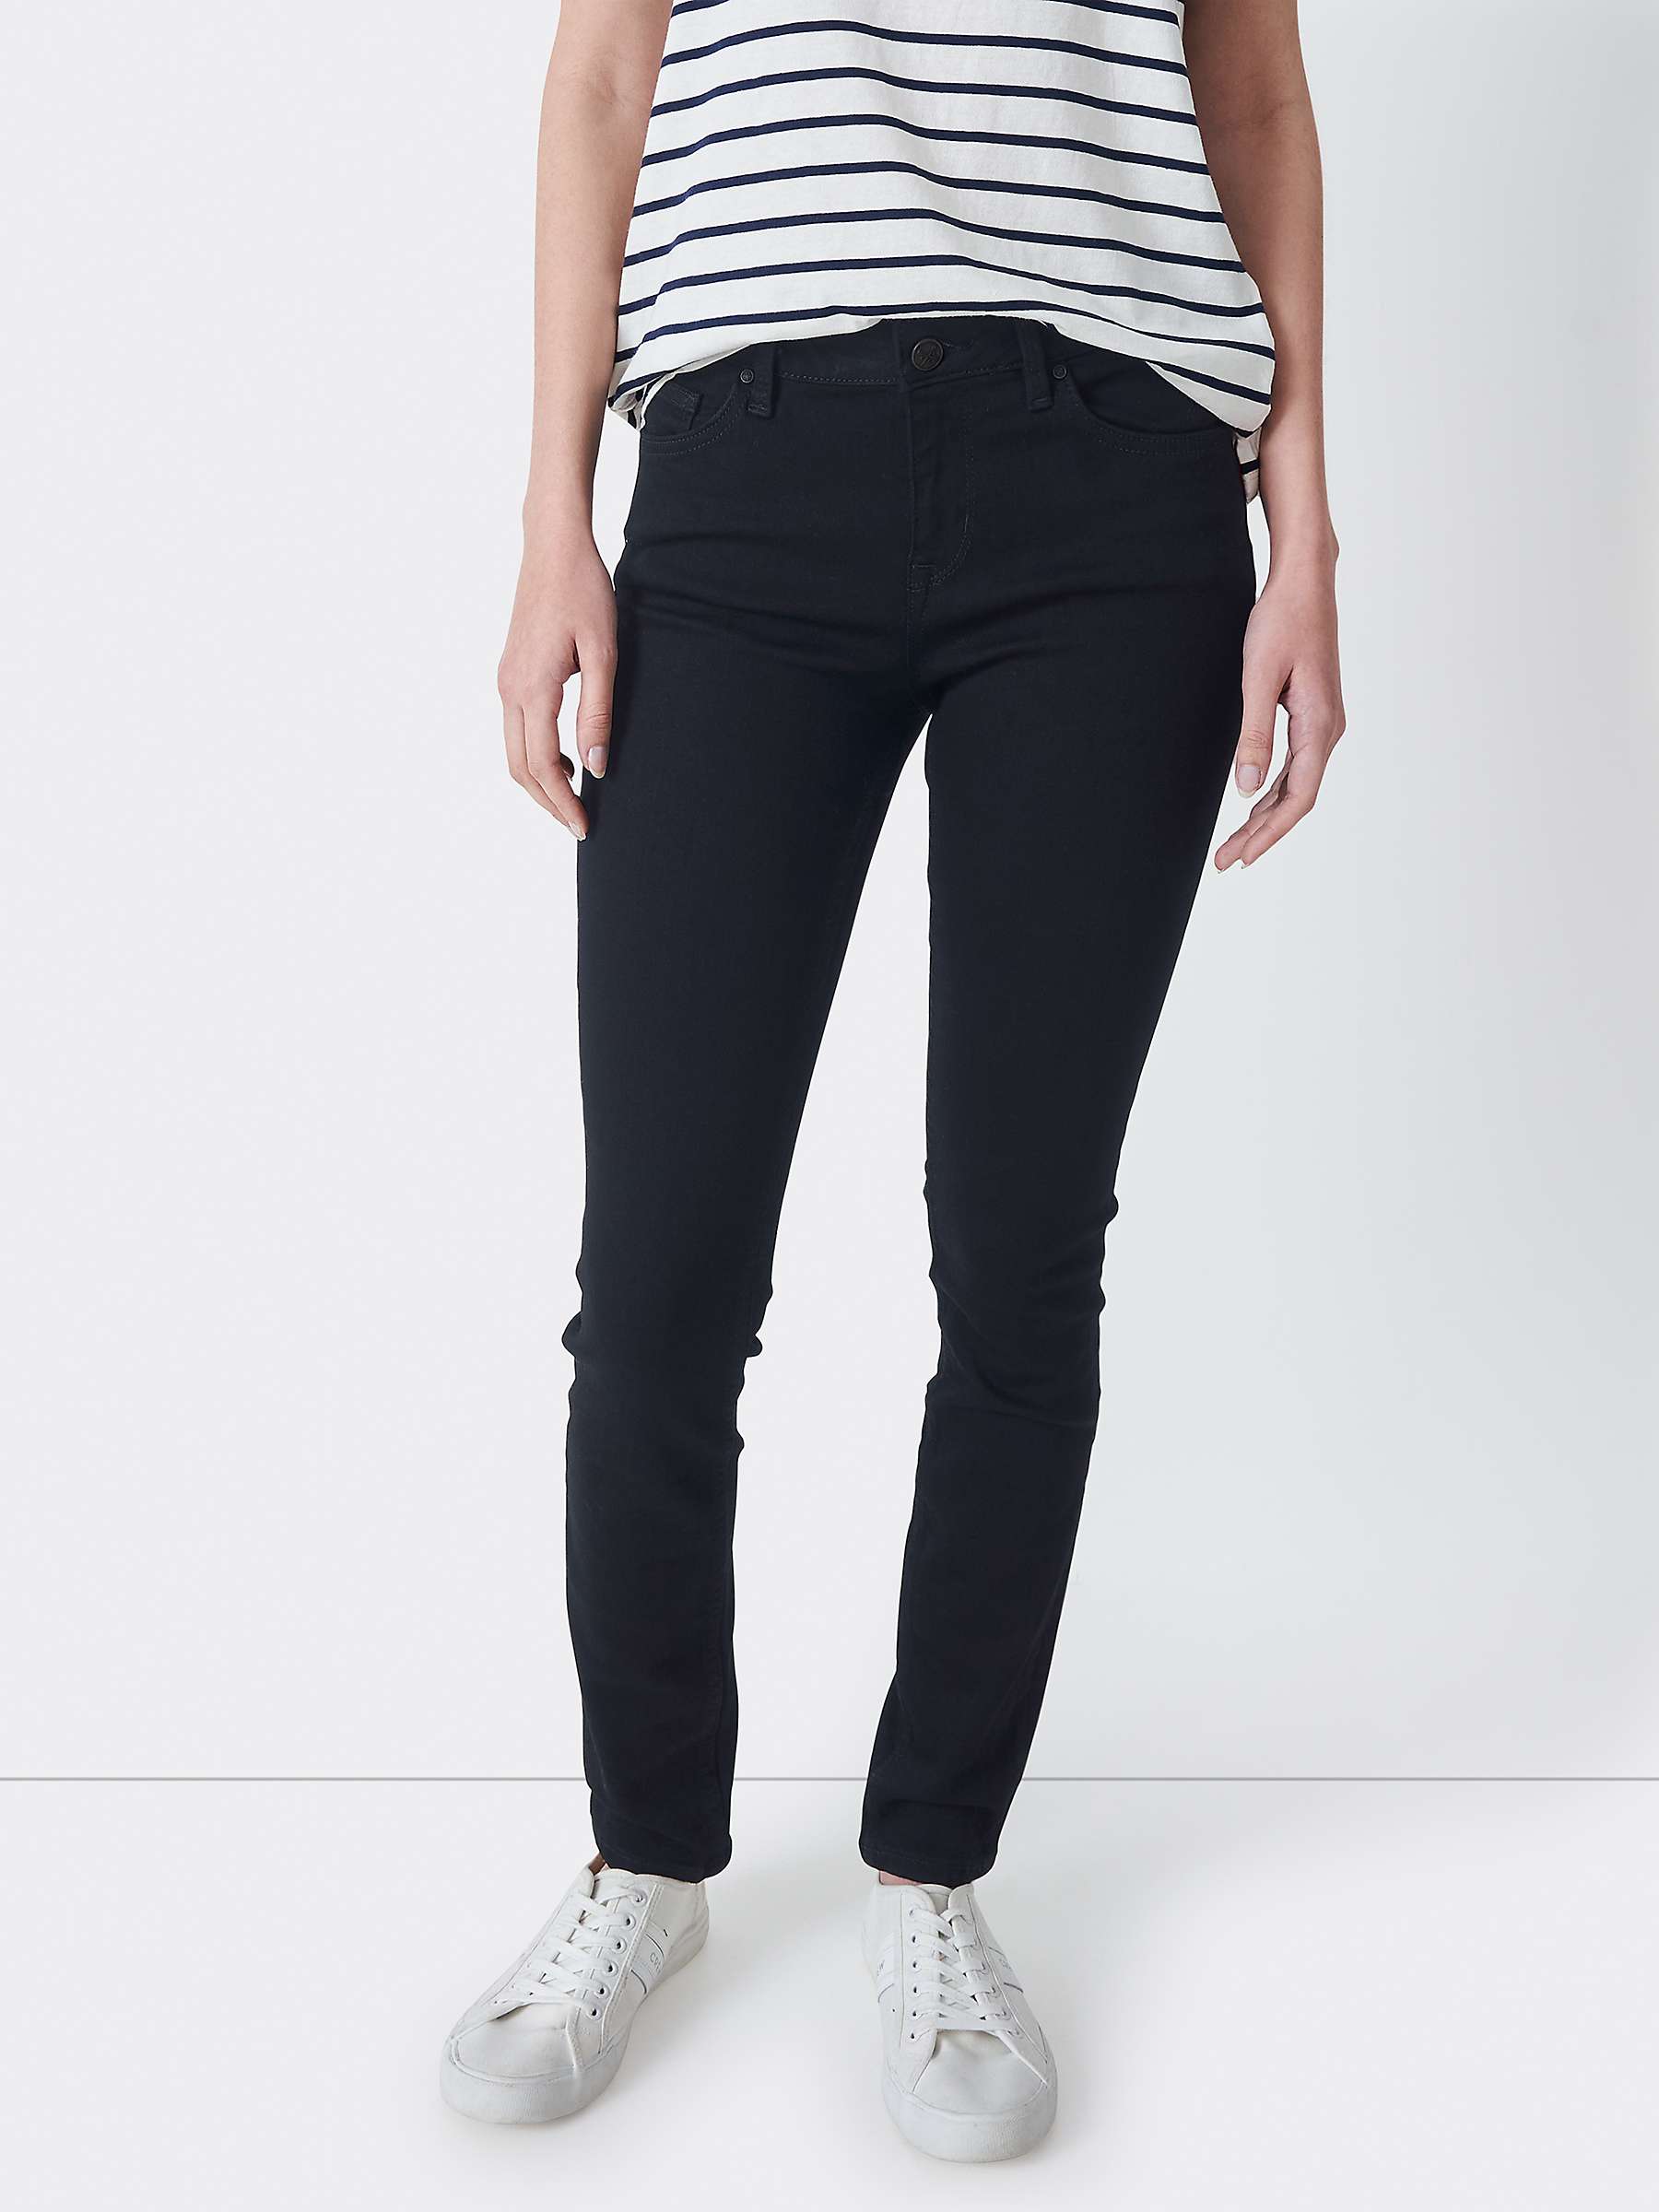 Buy Crew Clothing Skinny Jeans, Black Online at johnlewis.com